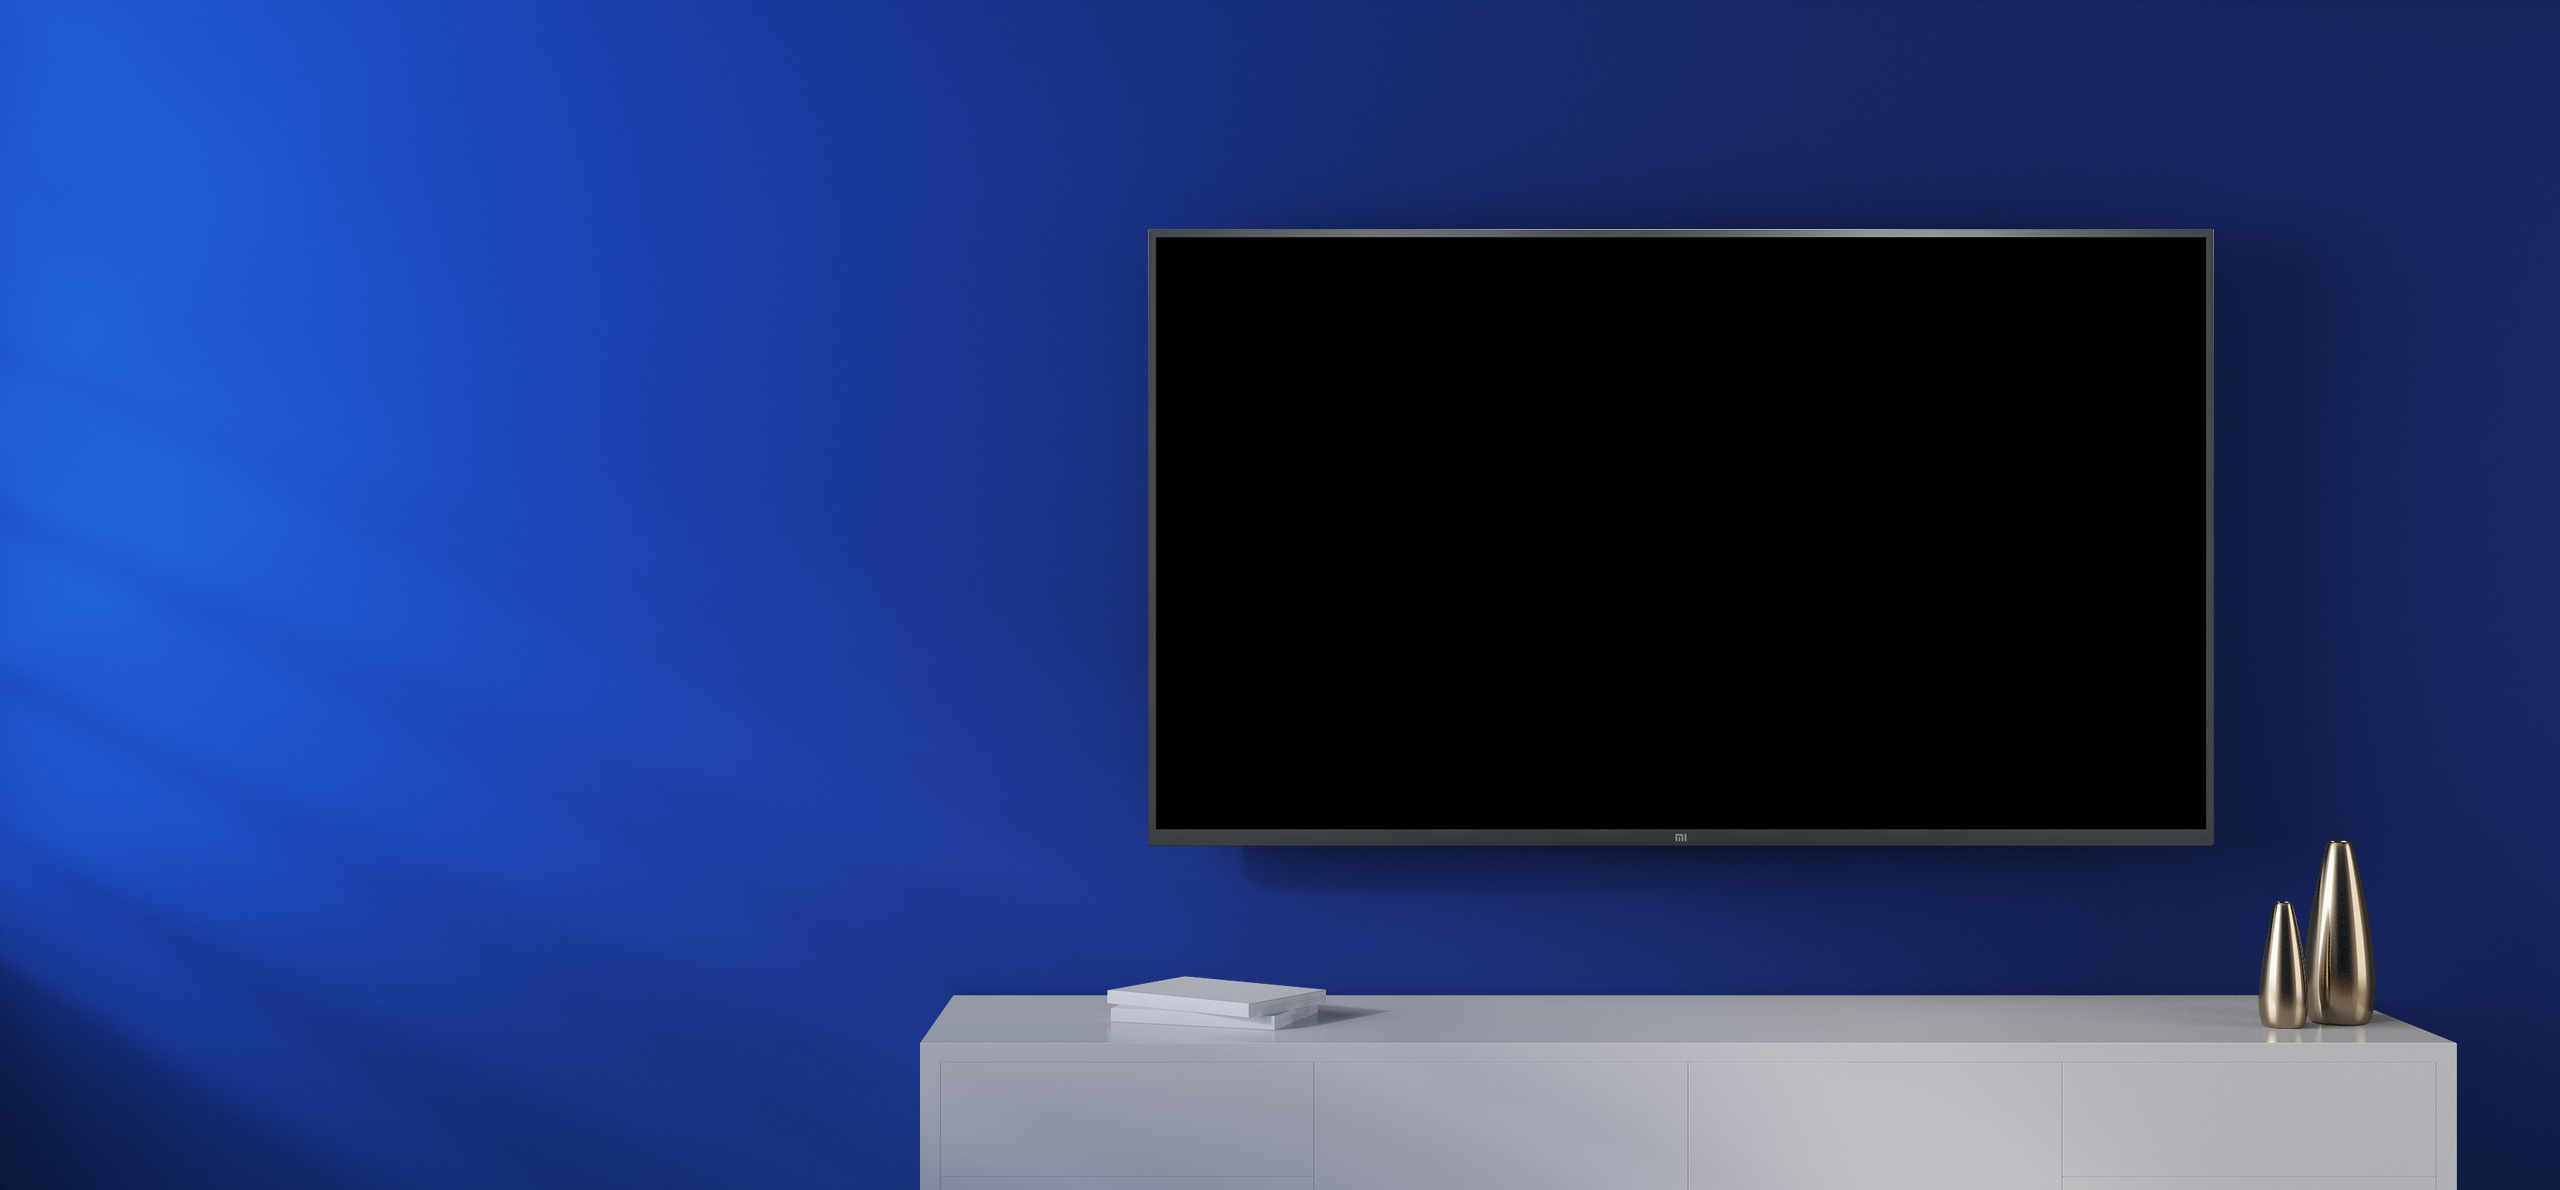 Телевизоры xiaomi global. Телевизор Xiaomi mi TV 4s 43. Телевизор Xiaomi черный экран. Телевизор Xiaomi 4s 50 черный экран. Ксяоми телевизор темный экран.